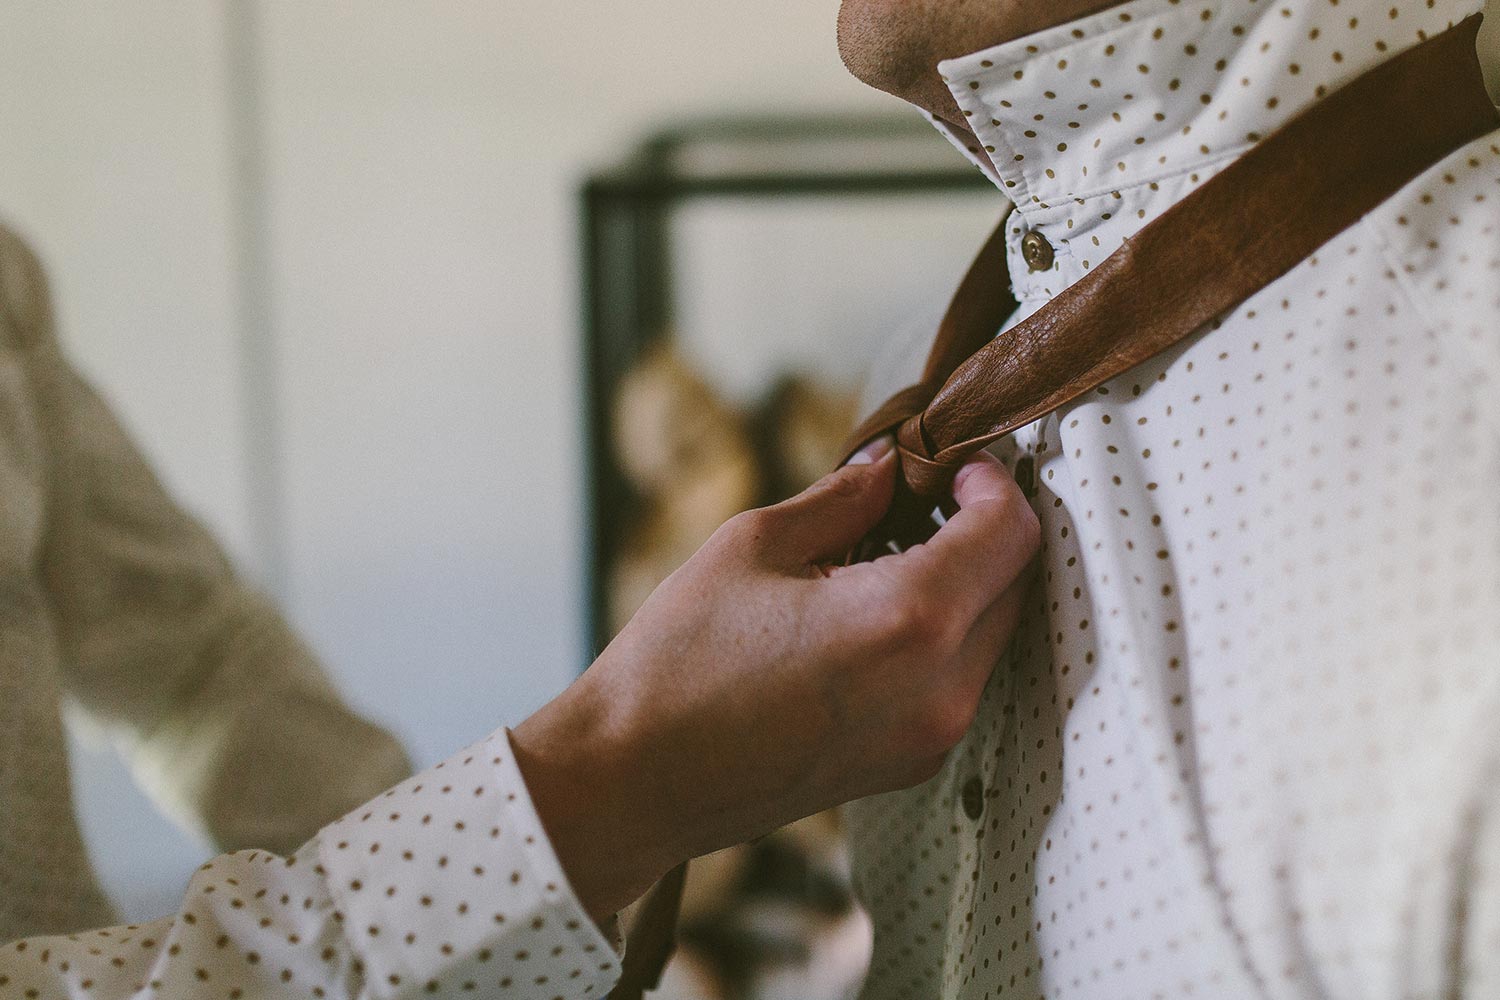 WEEF | Handmade Leather Ties – WEEF Weddings – Make your wedding unique and special